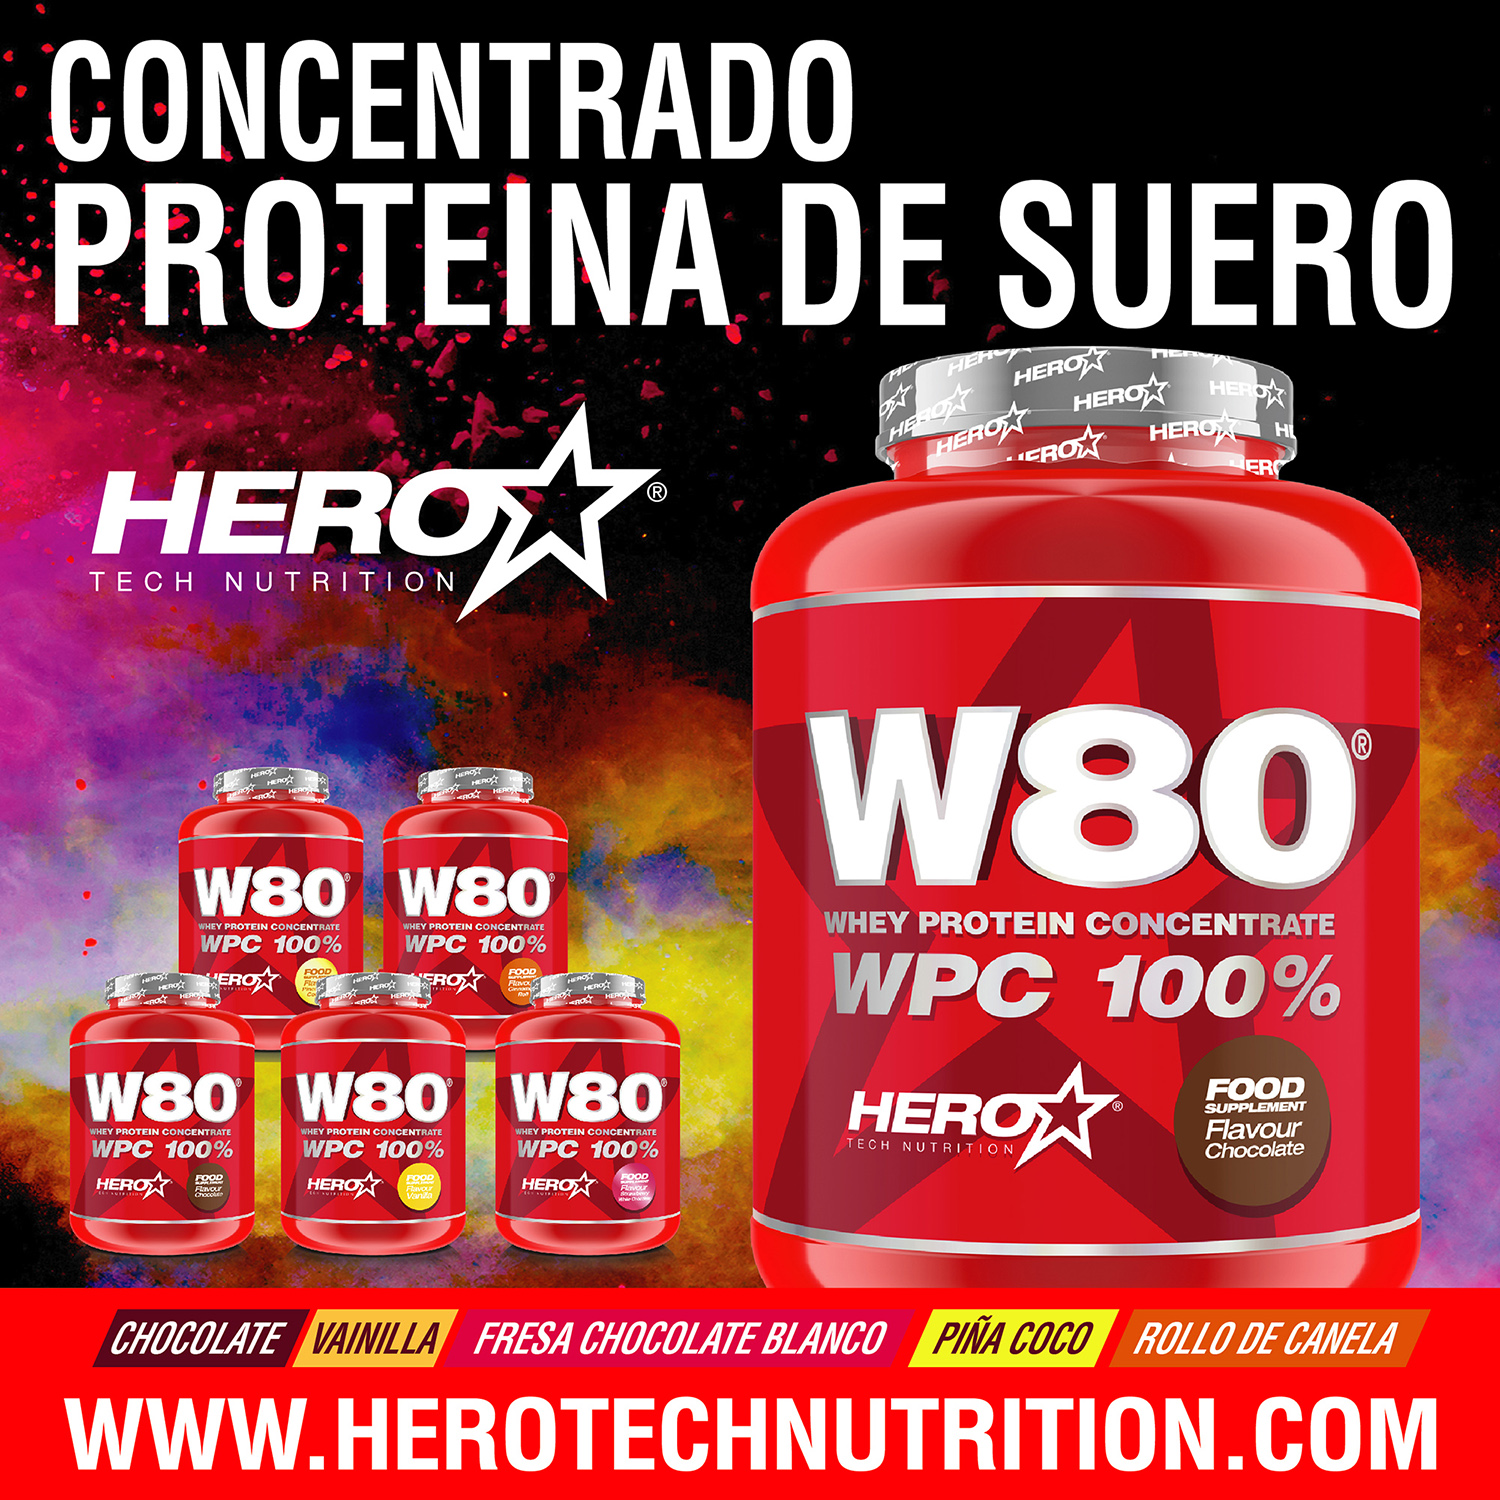 PROTEINA W80 HERO TECH NUTRITION herotechnutrition